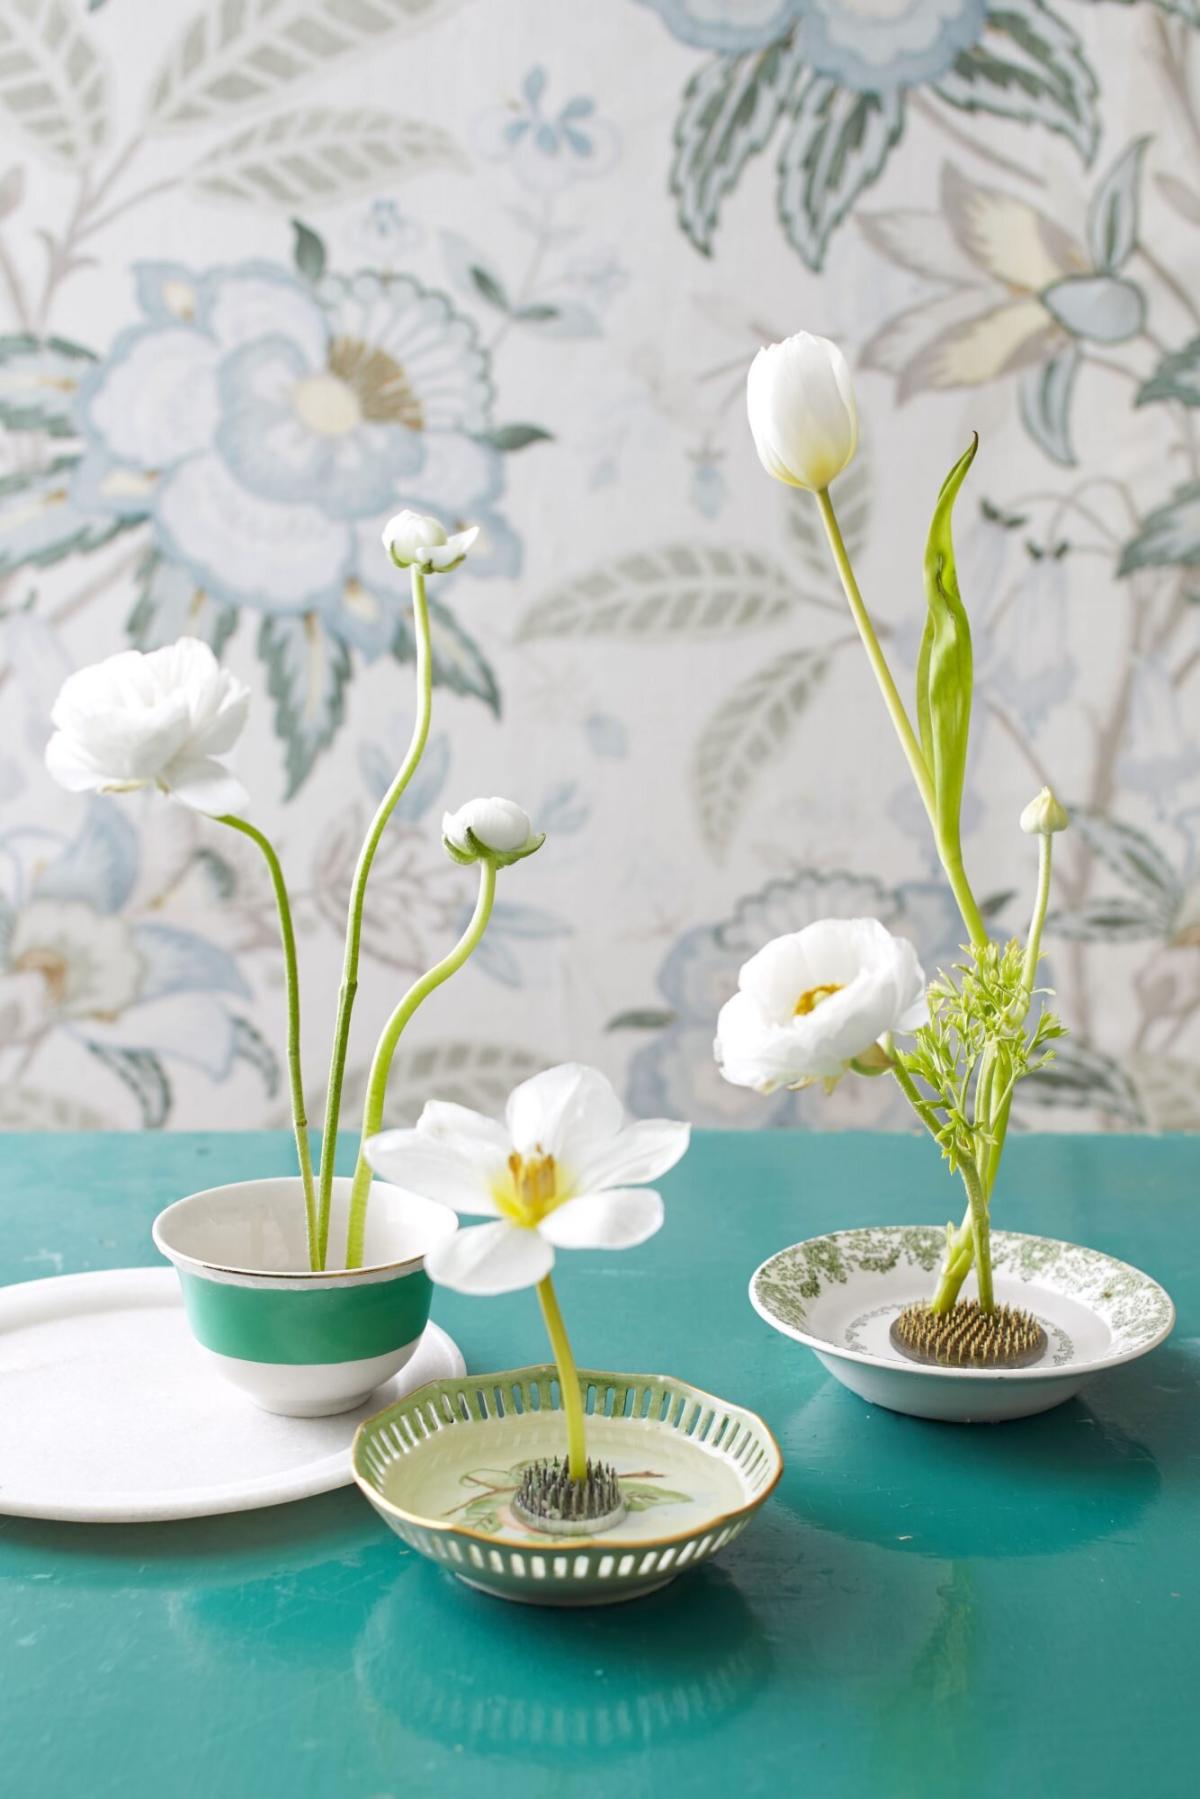 How To Use a Floral Frog for Effortless Vase Designs